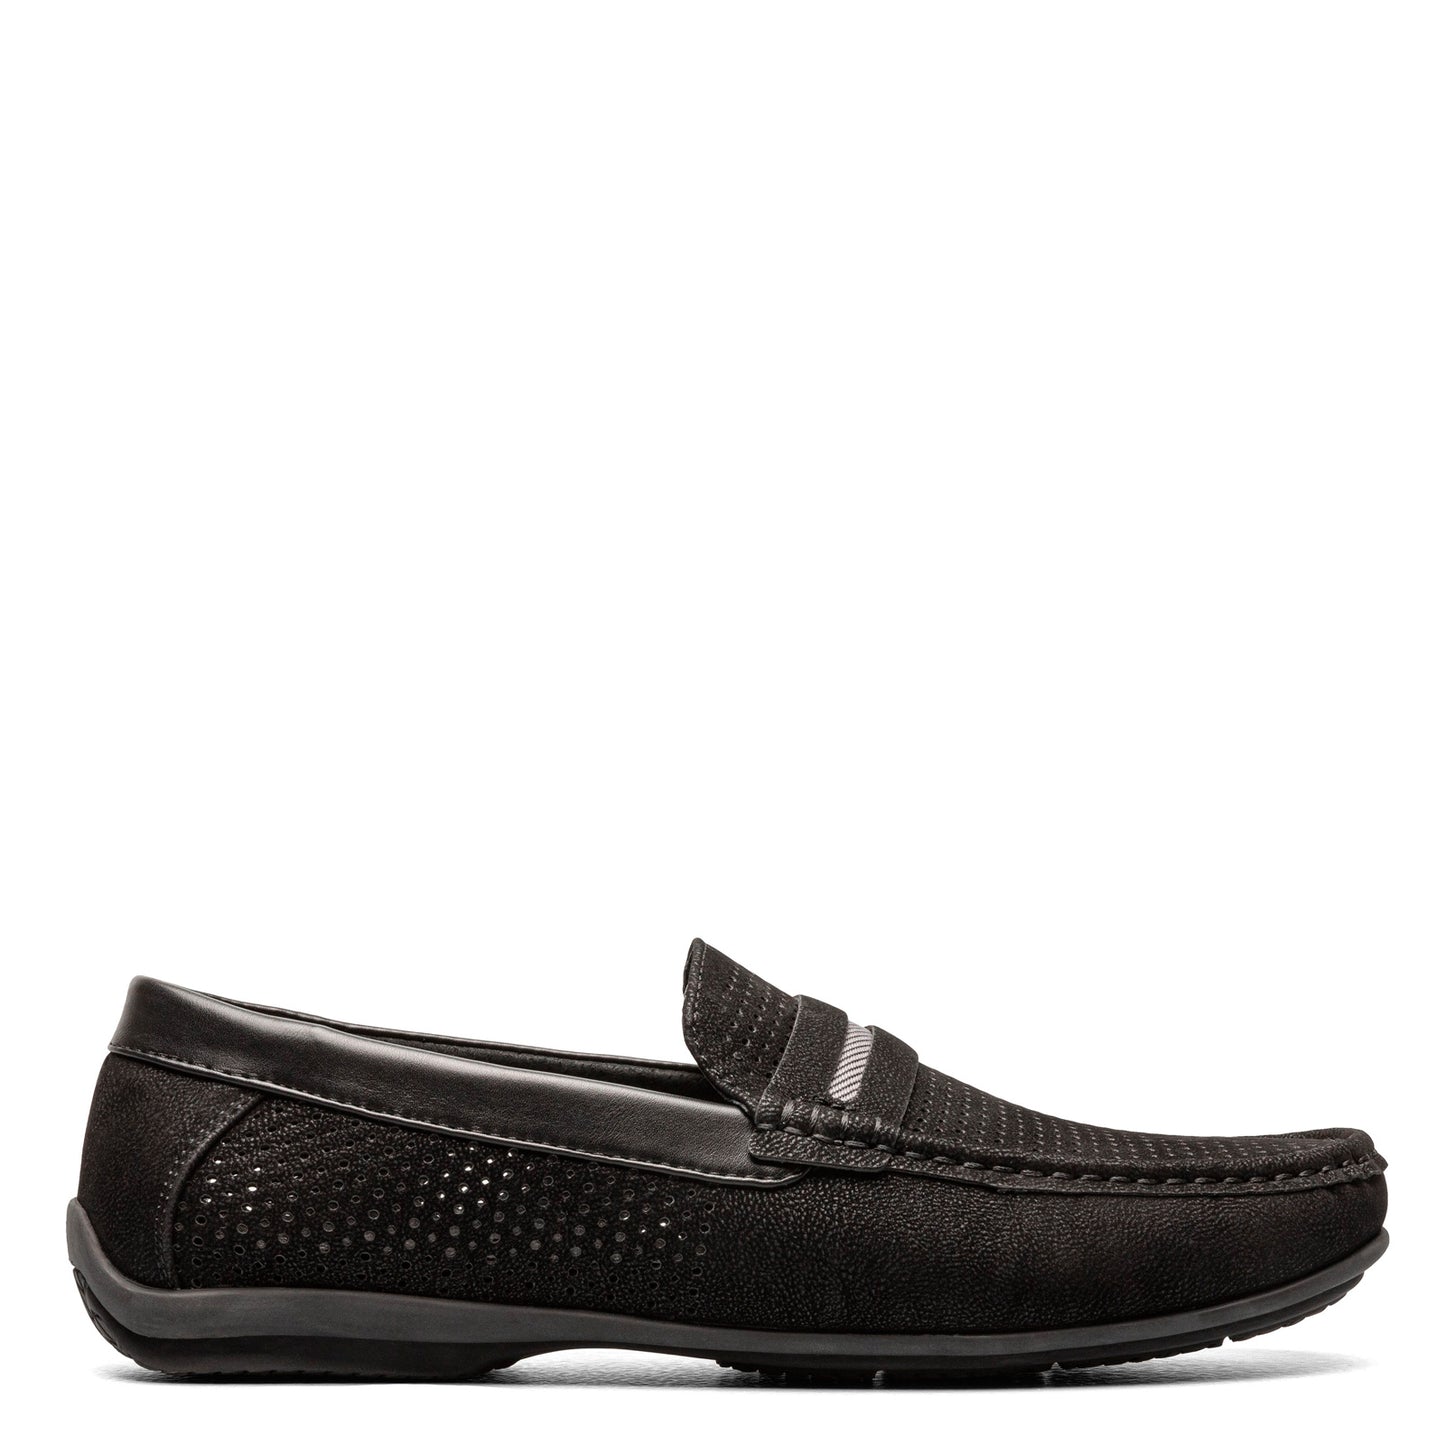 Peltz Shoes  Men's Stacy Adams Corby Loafer BLACK 25513-001